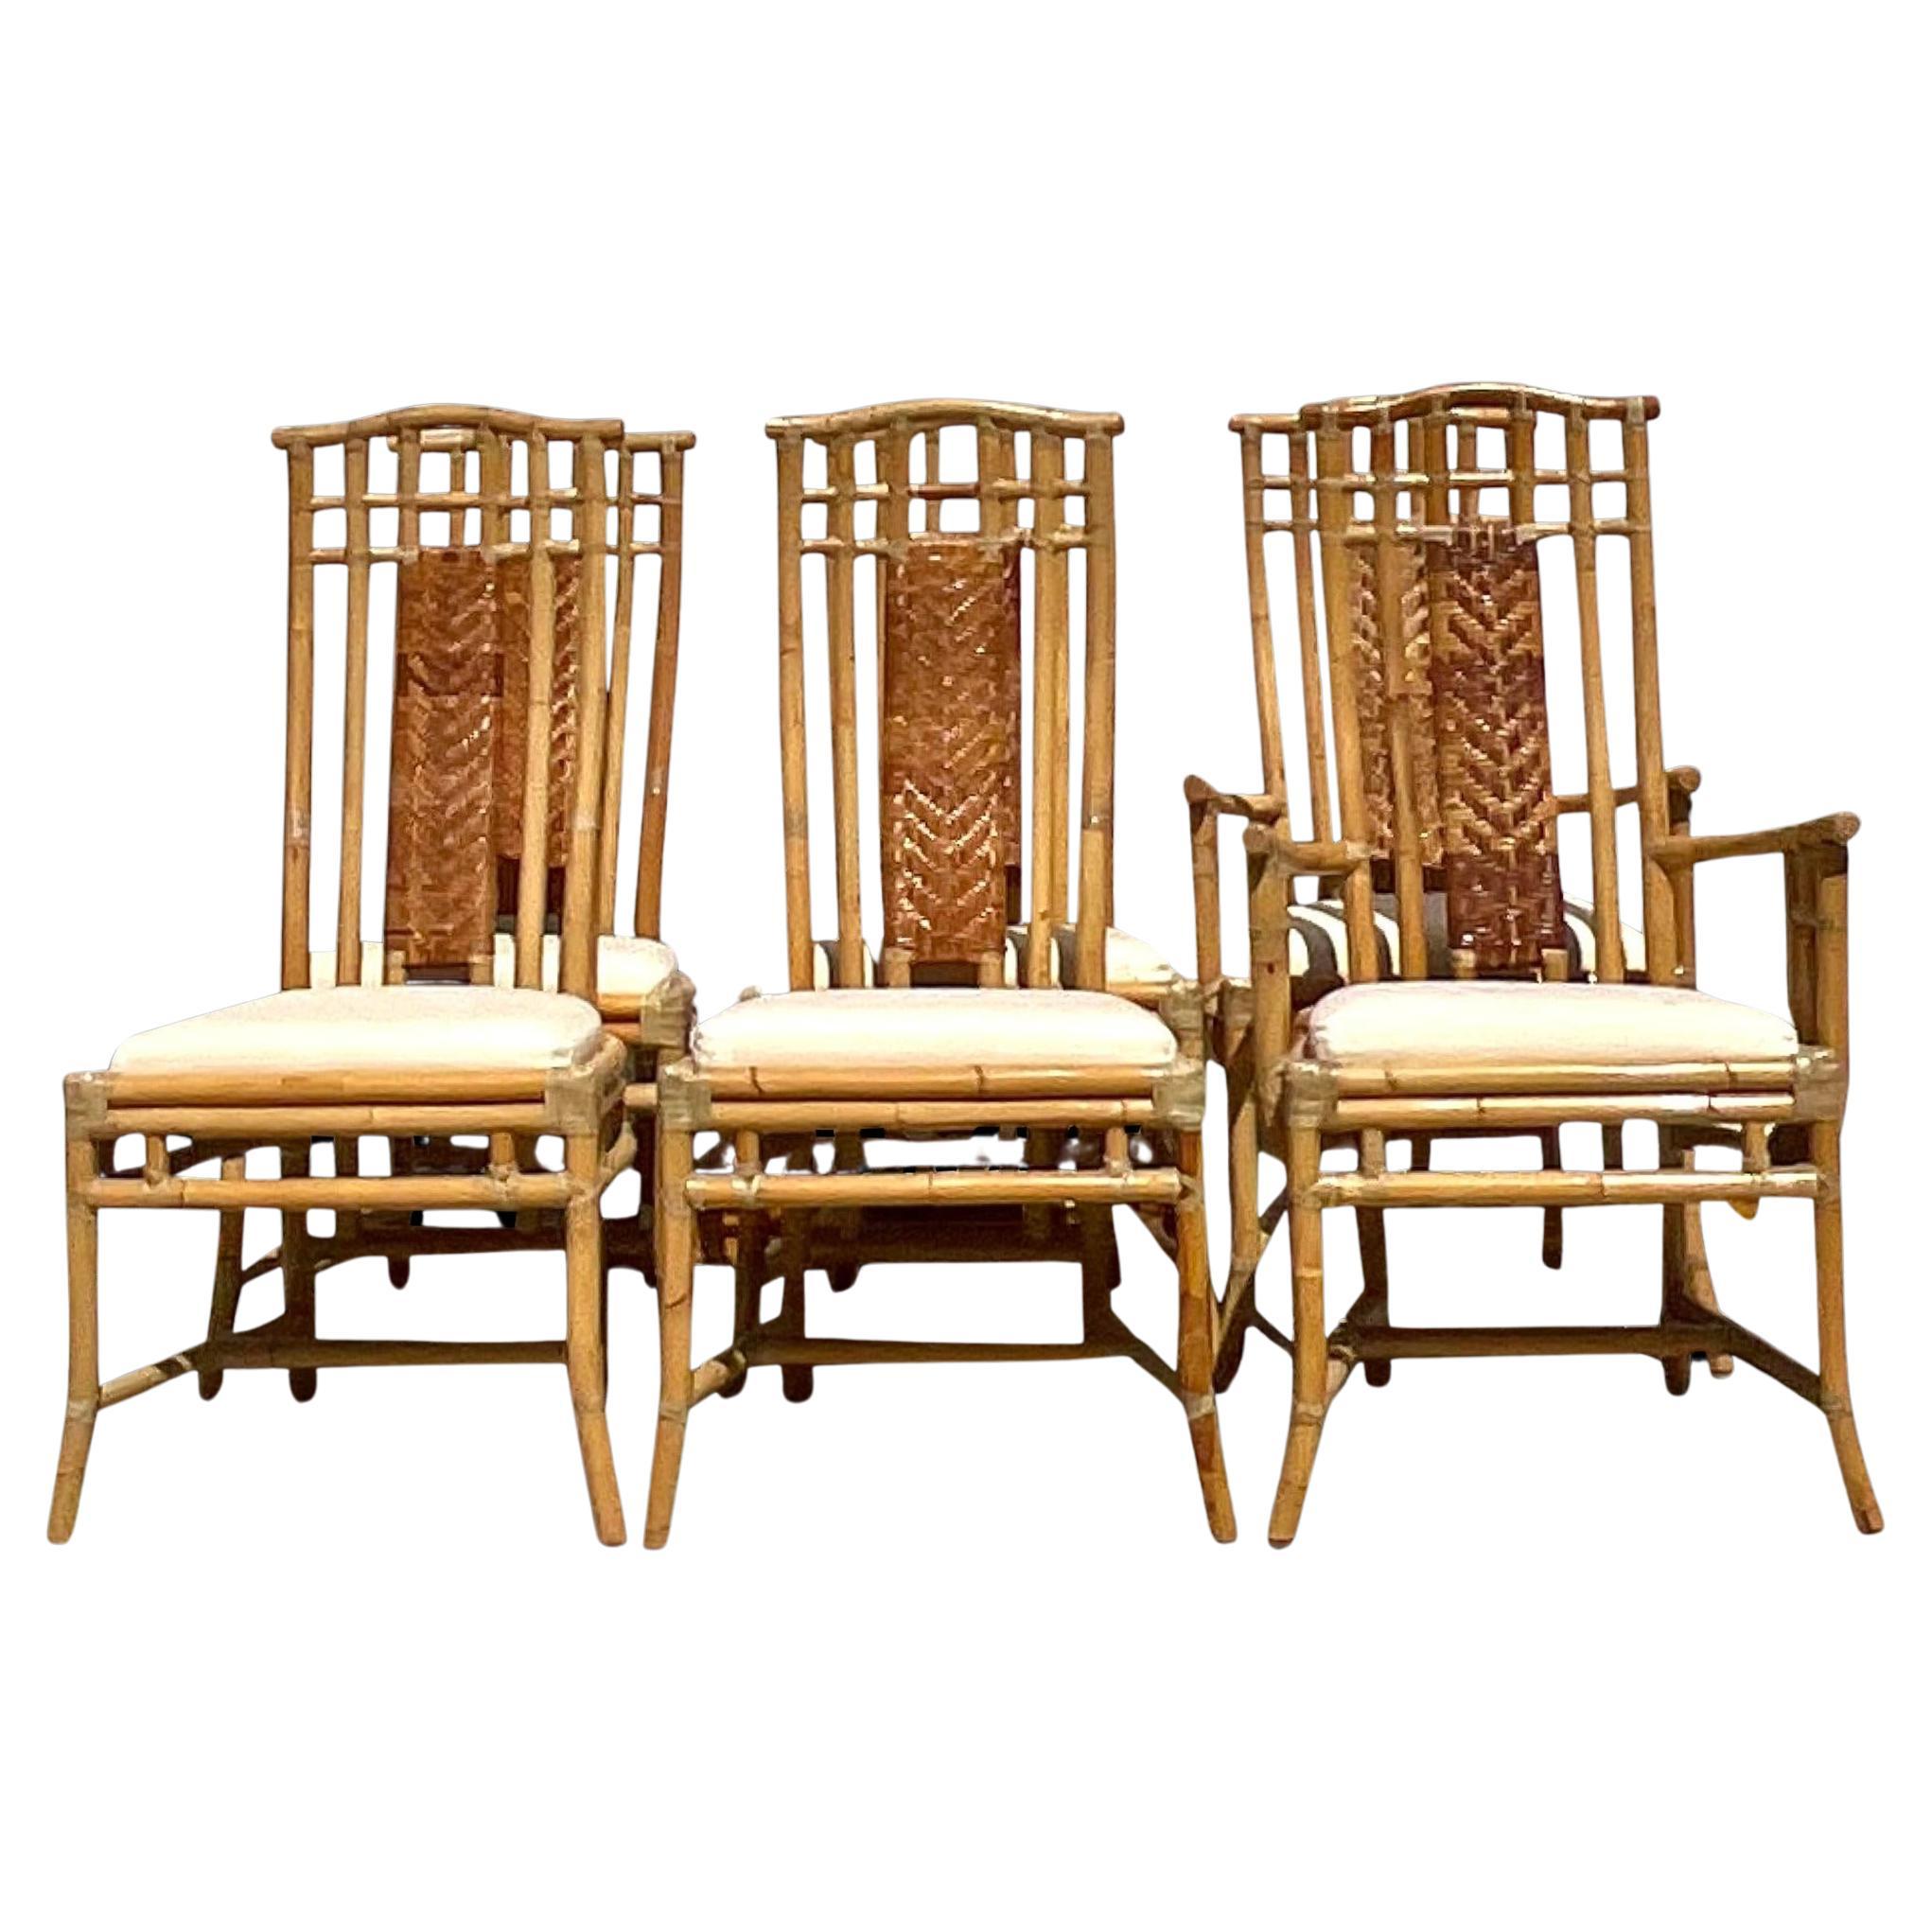 Vintage Coastal High Back Woven Rattan Chairs - Set of 6